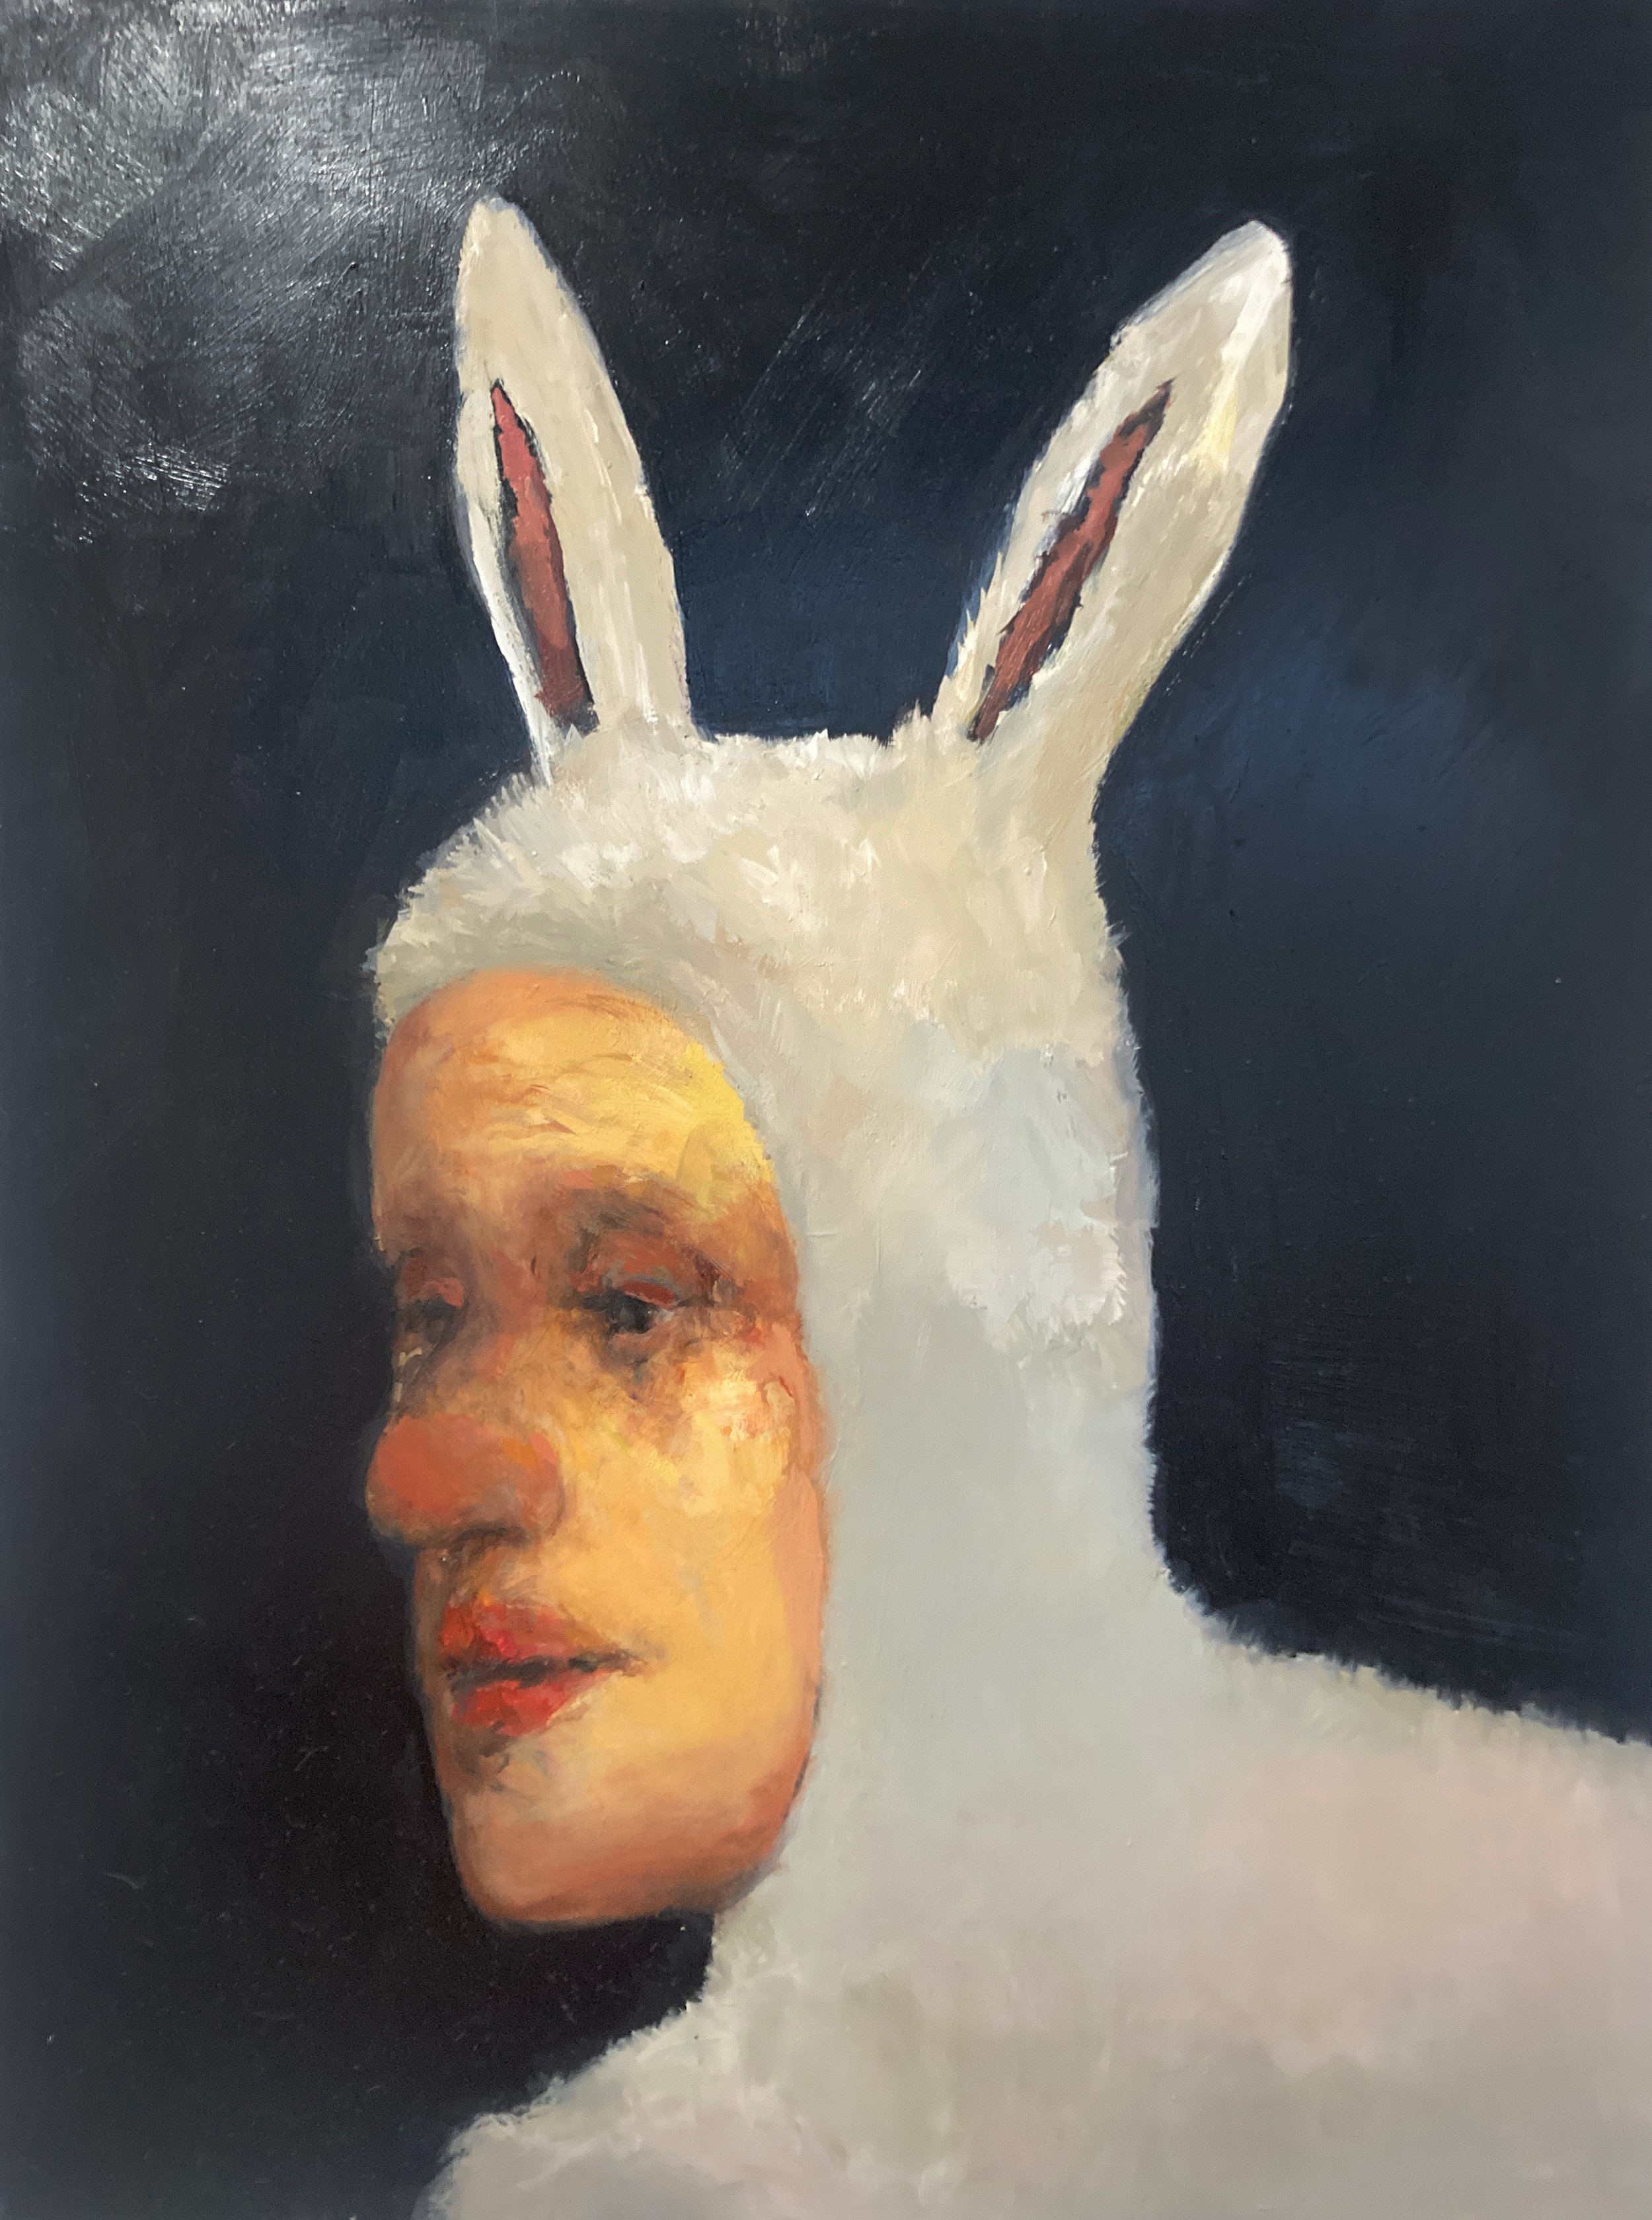  Bunny 3, 2020, Oil on panel, 18 x 24” 